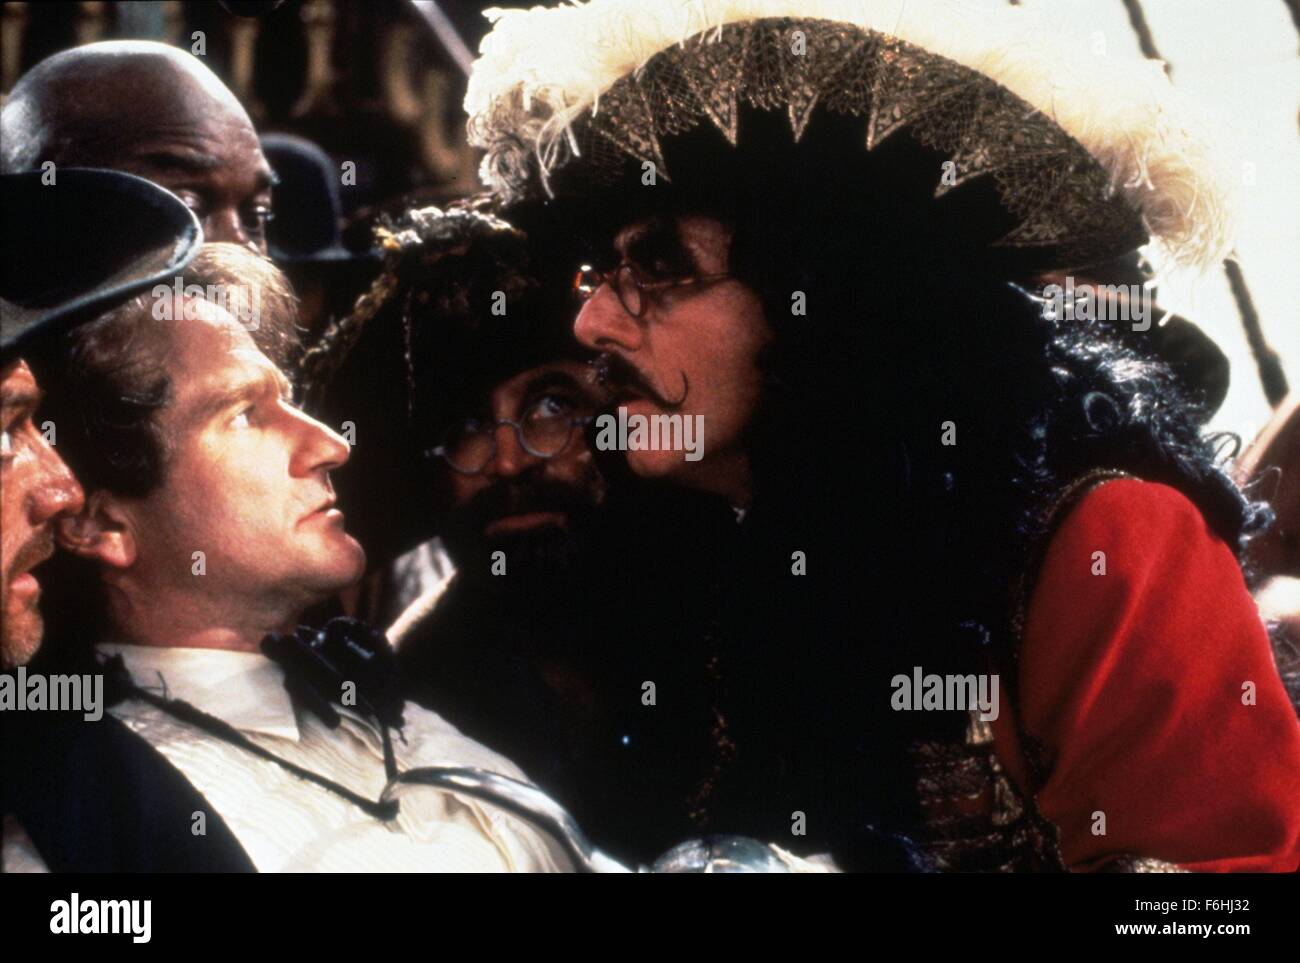 Original film title: HOOK. English title: HOOK. Year: 1991. Director:  STEVEN SPIELBERG. Stars: DUSTIN HOFFMAN. Credit: COLUMBIA TRI STAR / Album  Stock Photo - Alamy